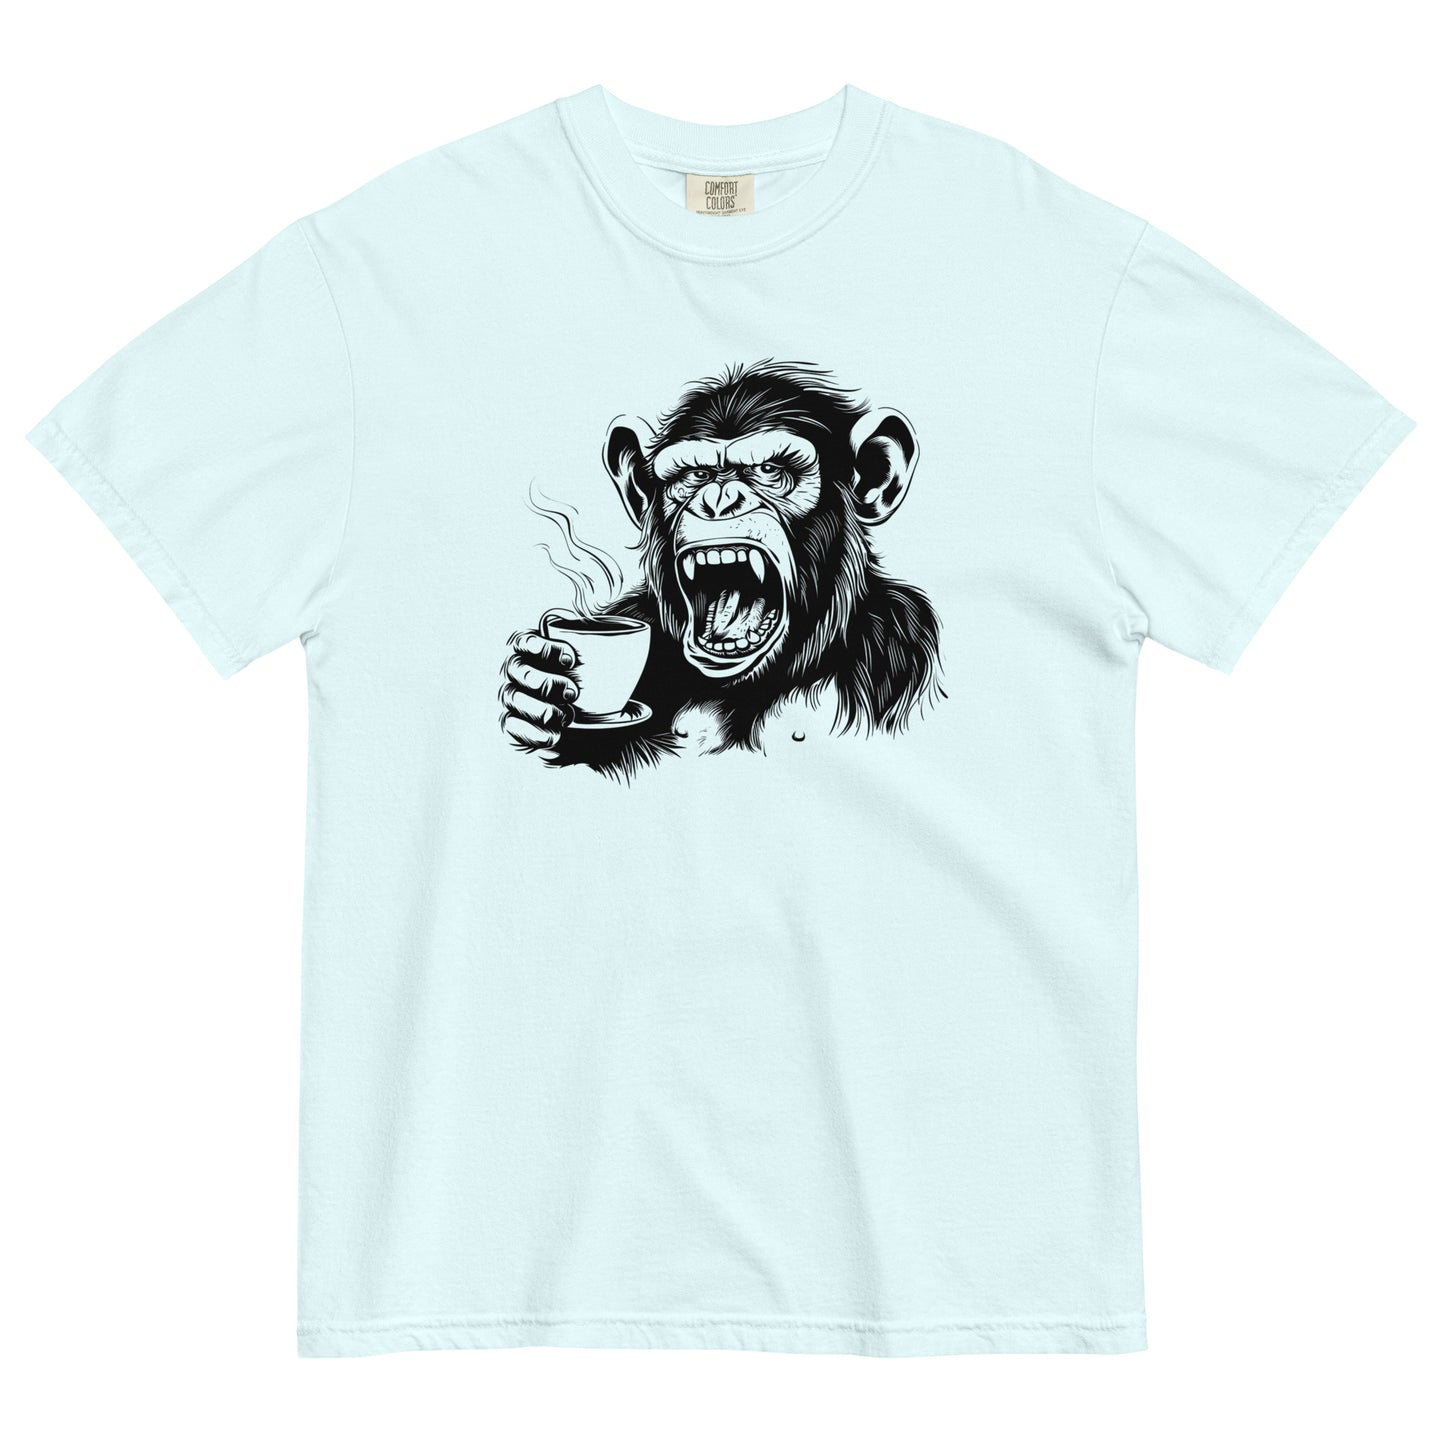 Gorilla Drinking Coffee t-shirt - Unisex